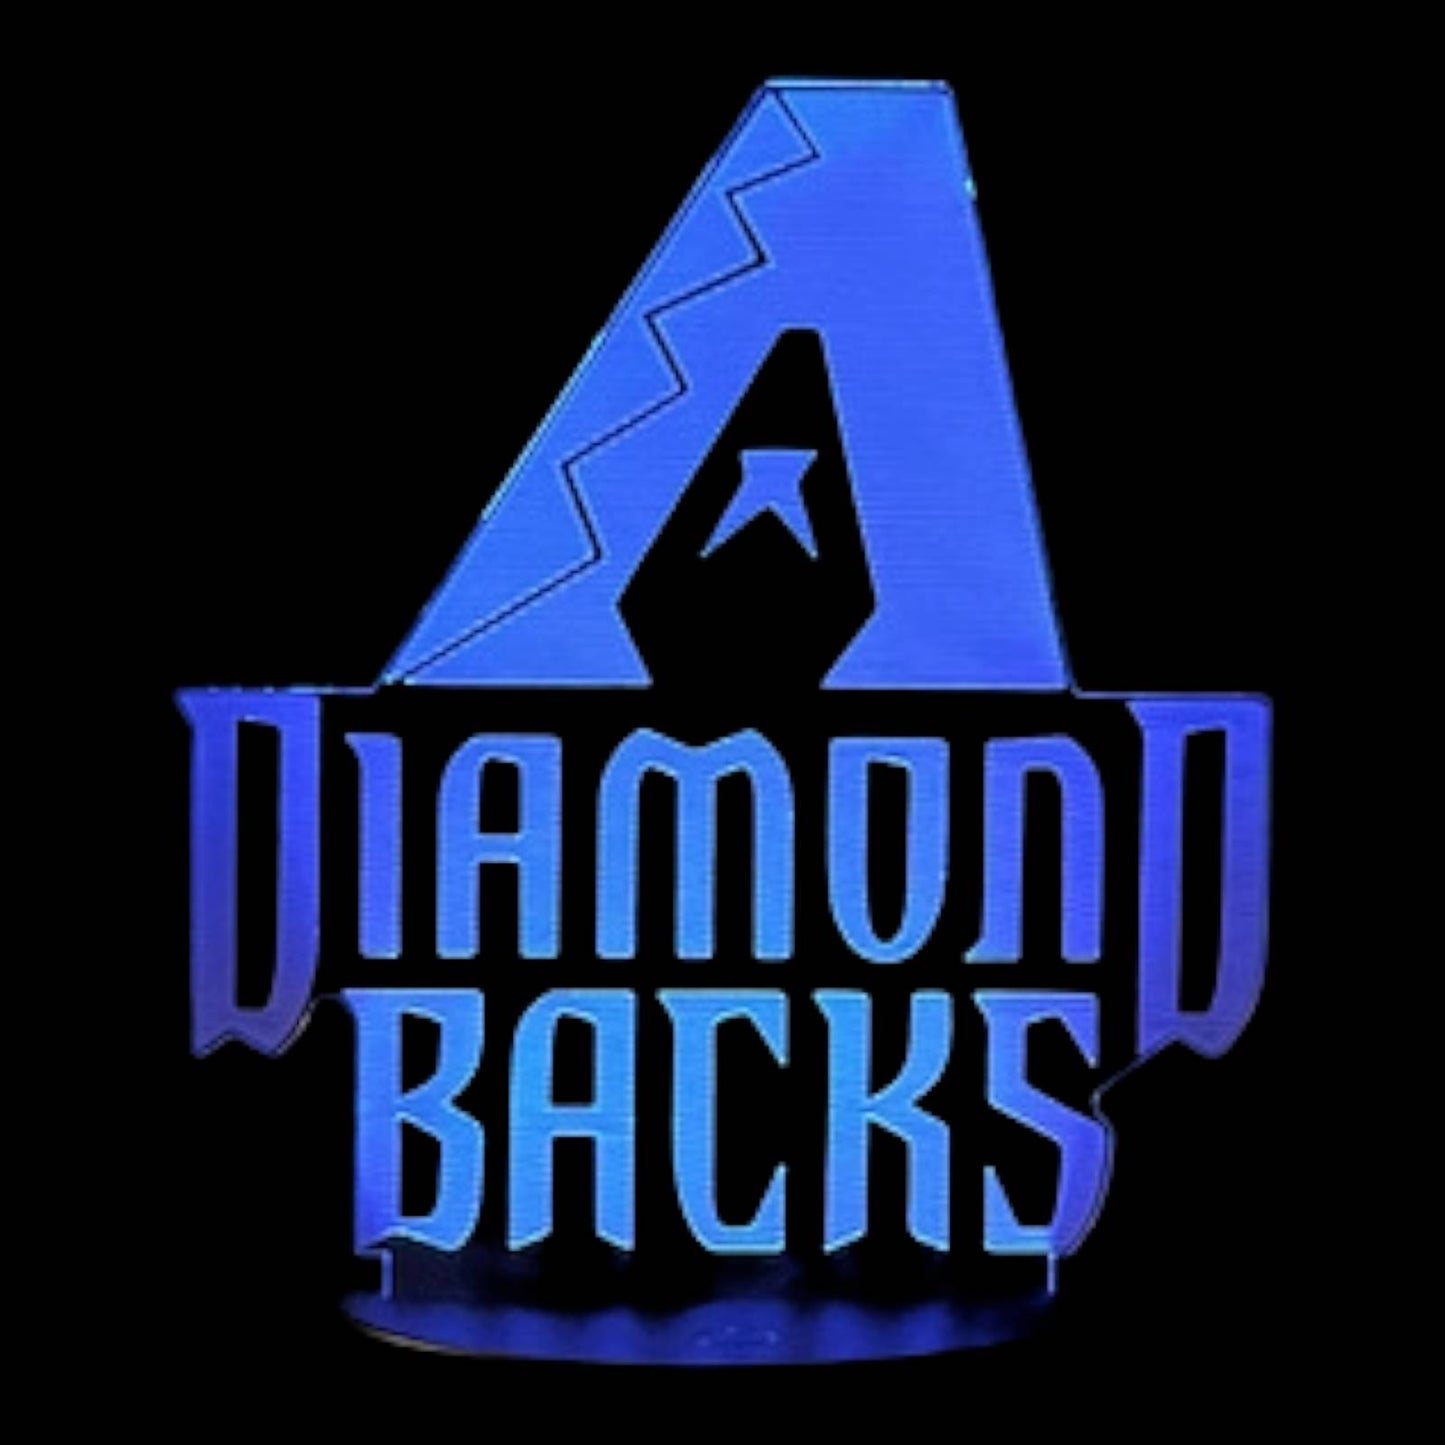 Arizona Diamondbacks 3D LED Night-Light 7 Color Changing Lamp w/ Touch Switch